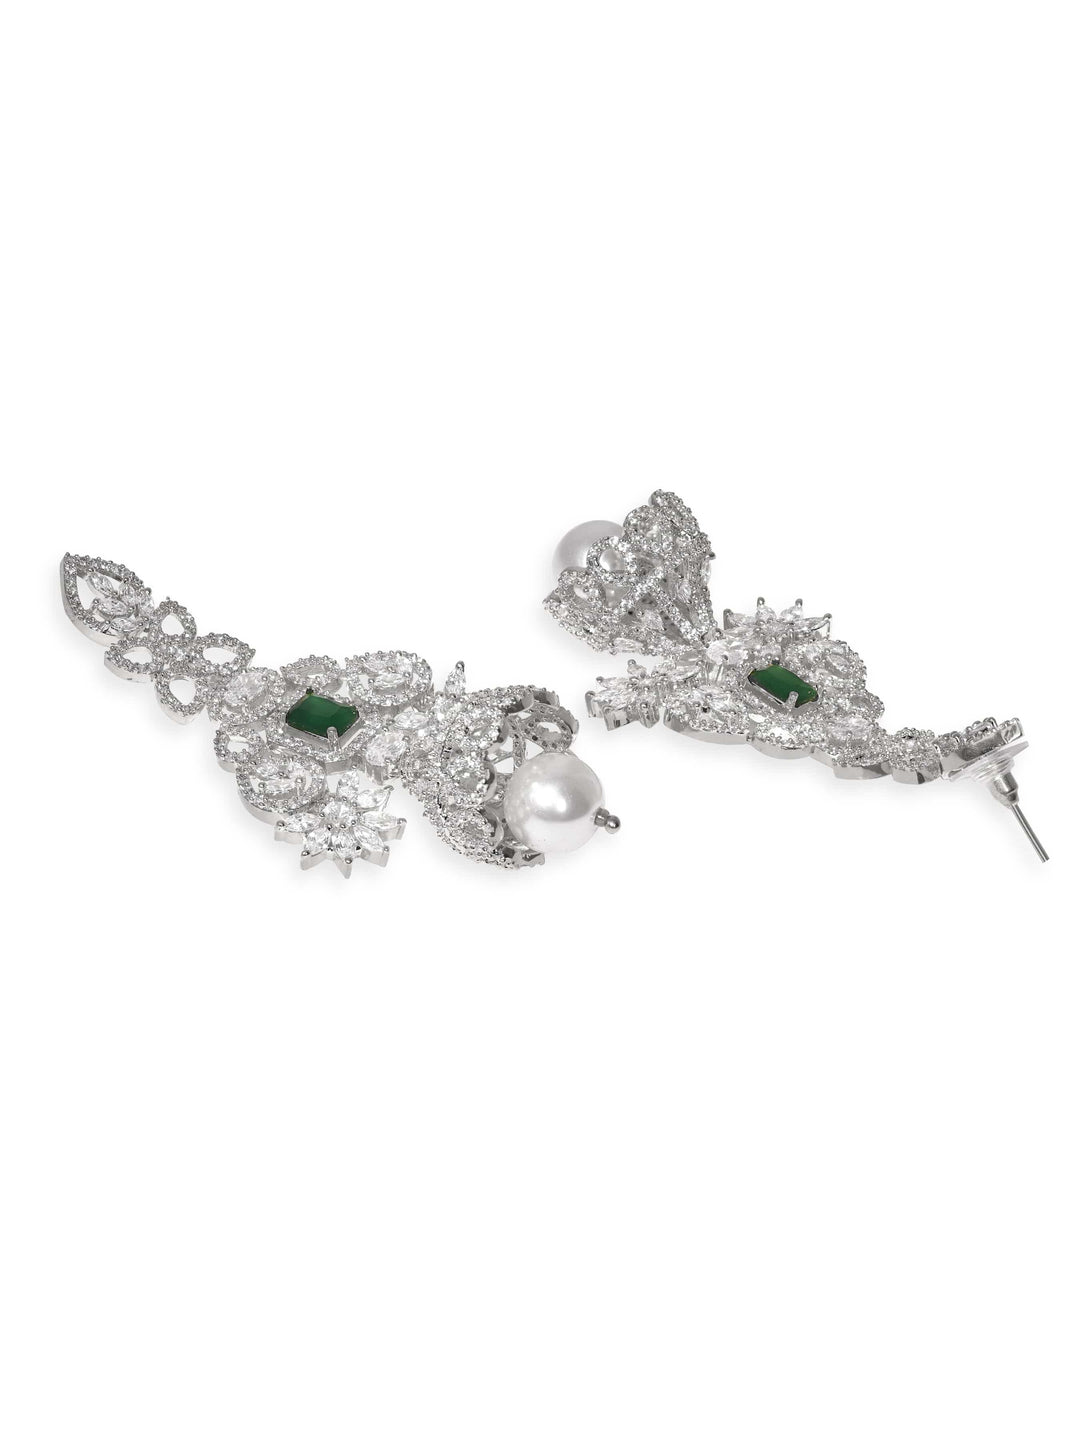 Rubans Majestic Radiance Rhodium Plated Zirconia and Emerald Chandelier Earrings Earrings